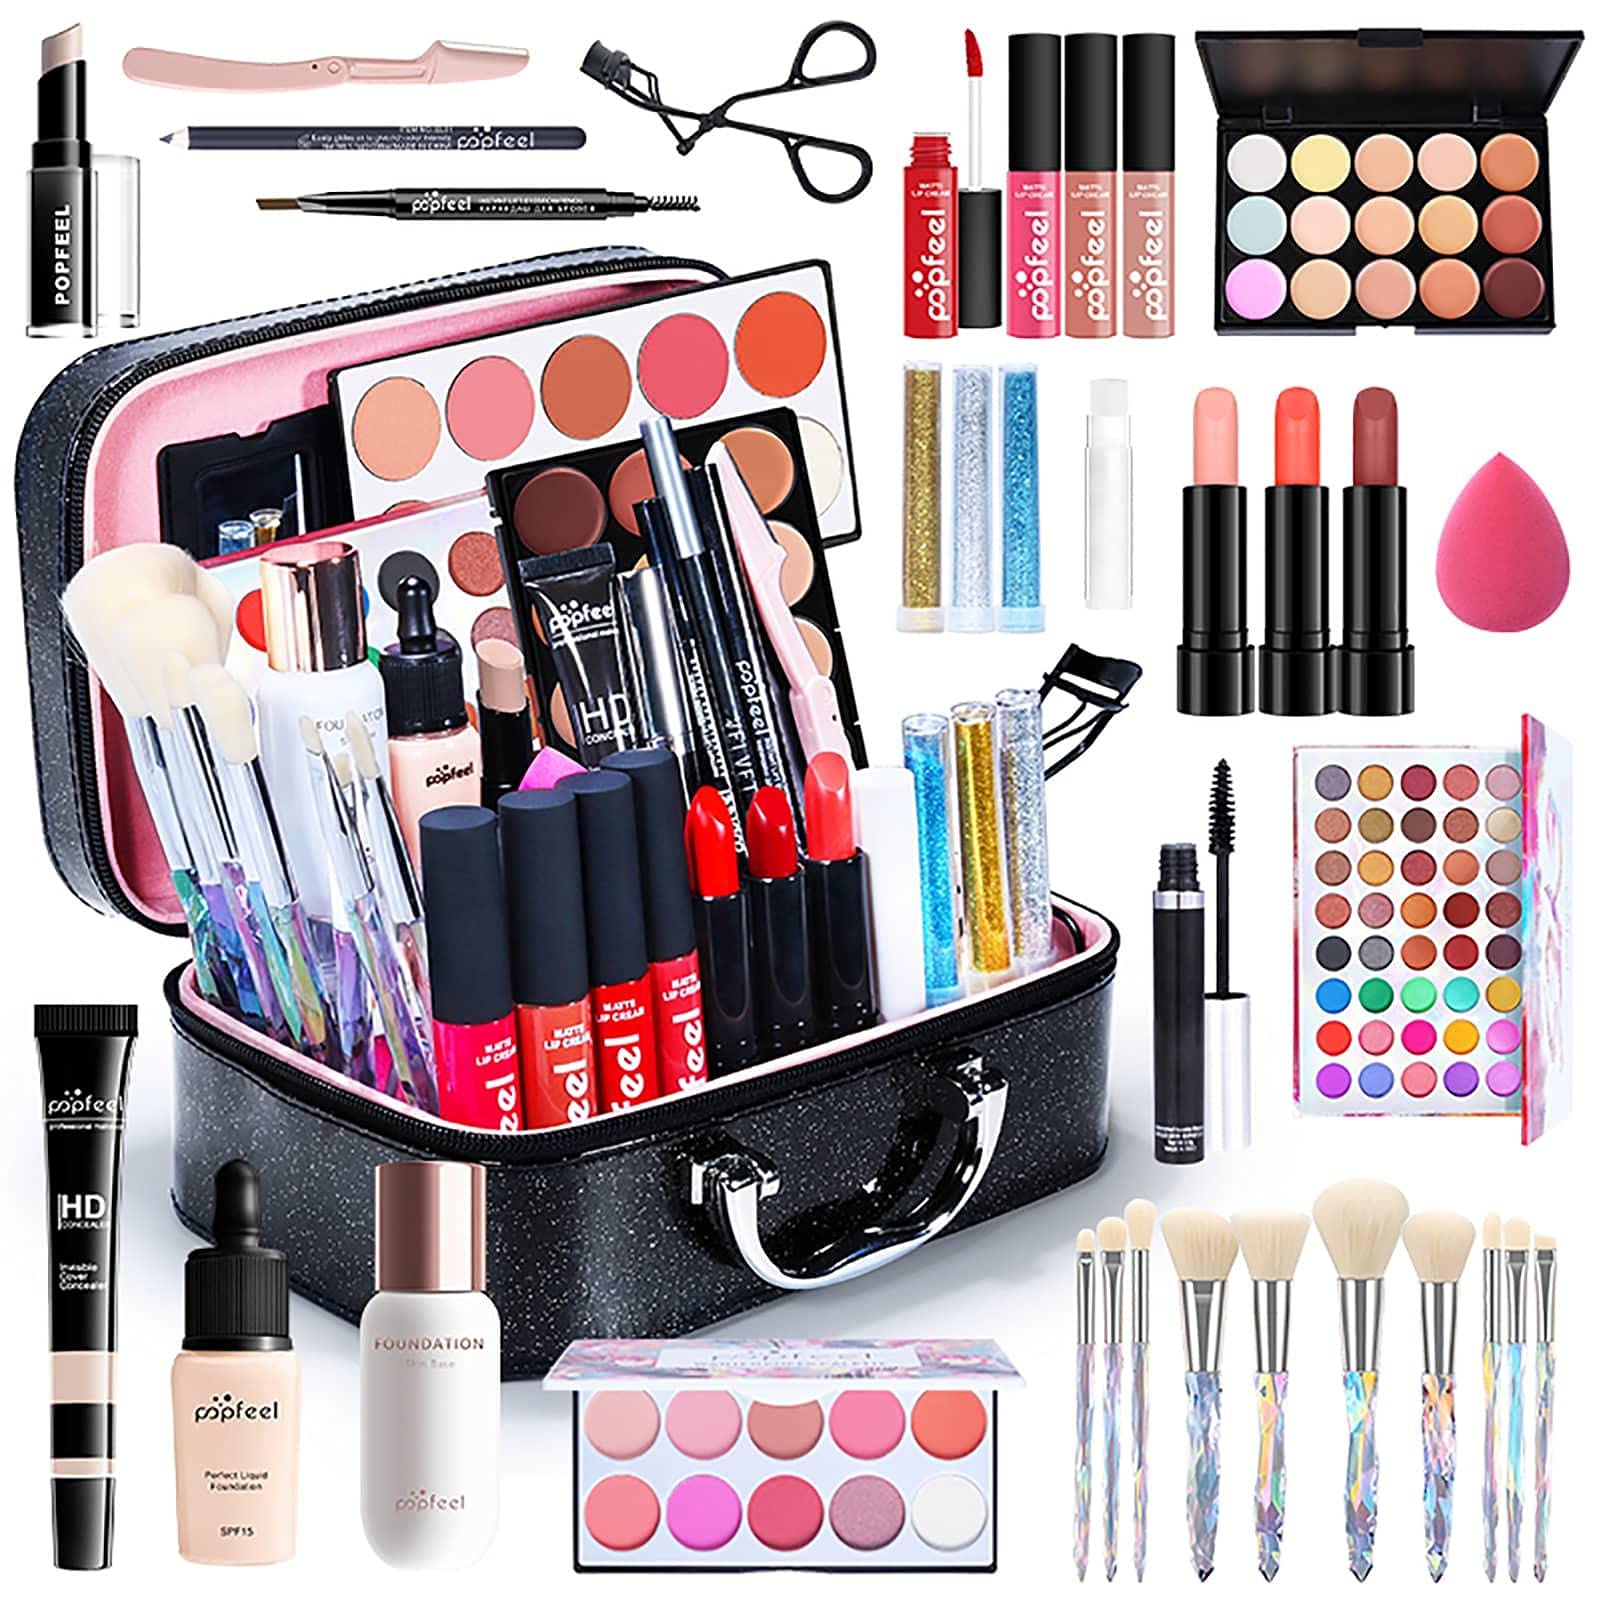 Pomrone 35-teiliges Make-up-Kosmetik-Set All In Beauty Make-up-Kosmetik-Set Make-up-Palettenbox Für Frauen Mädchen